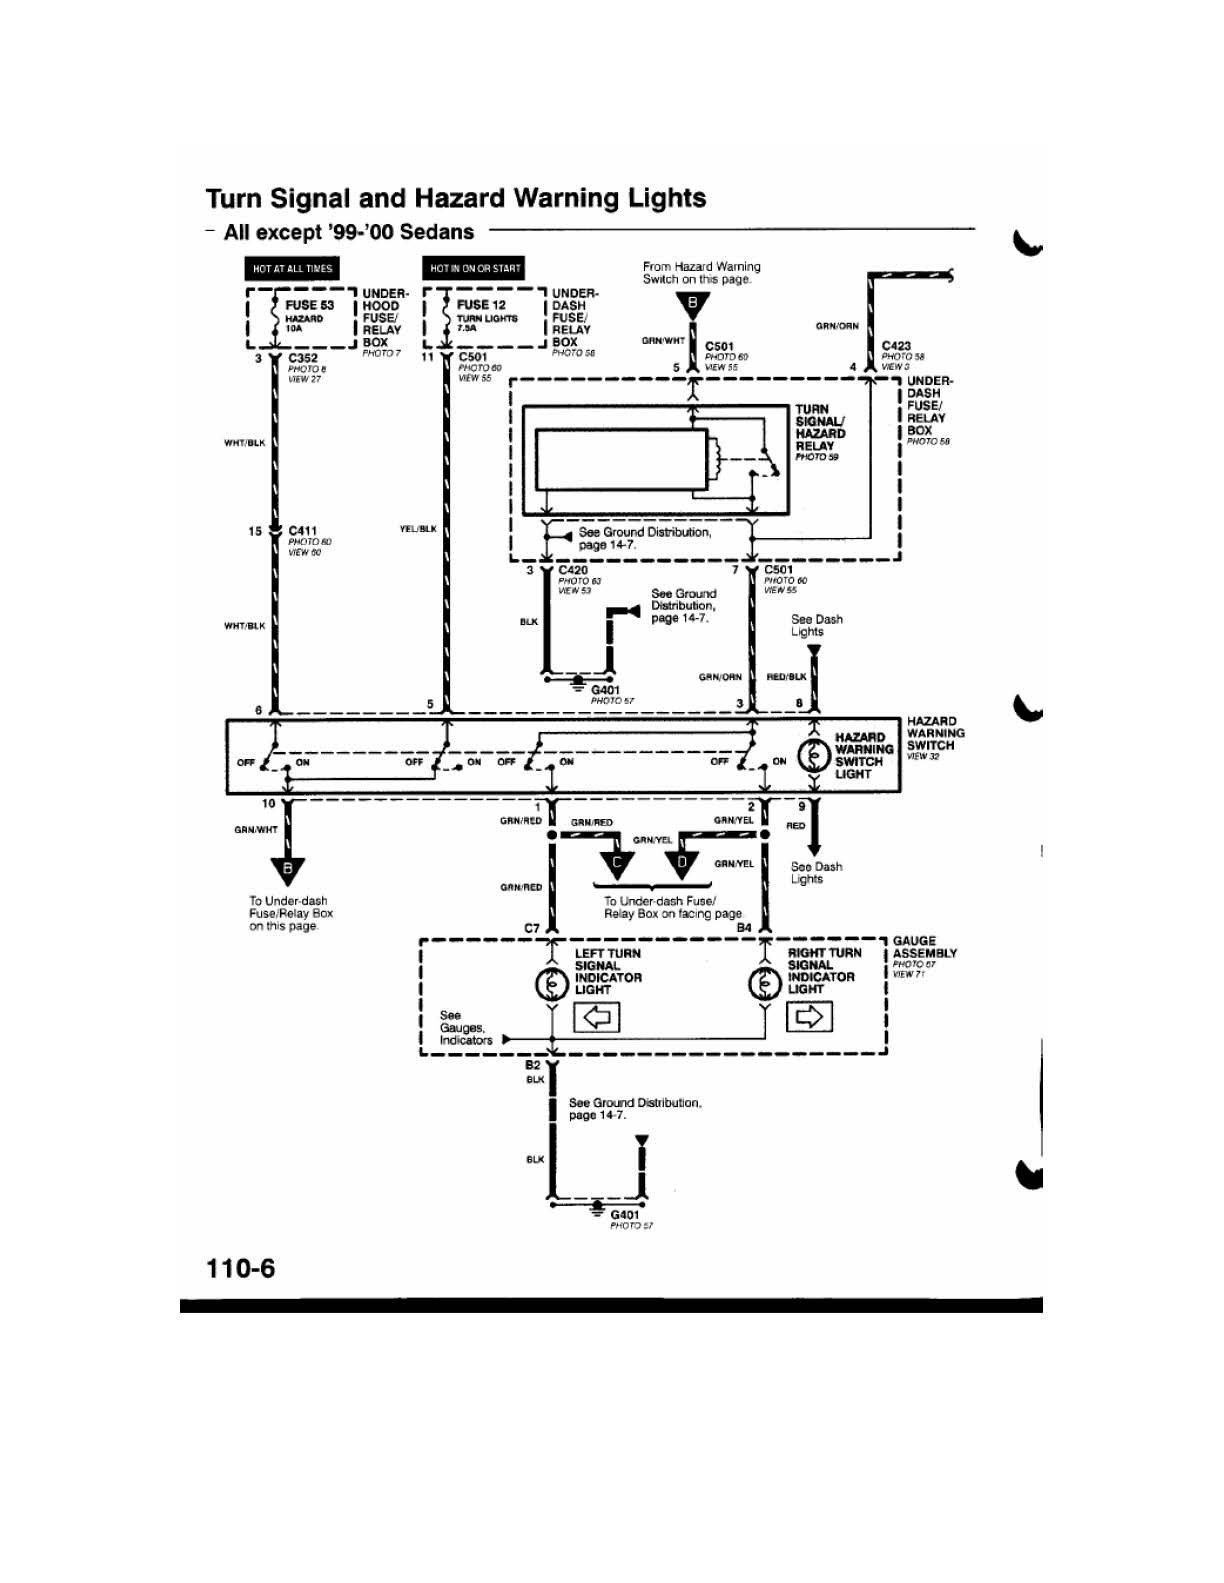 Led Turn Signal Wire Diagram 7 | Wiring Diagram - Badlands Turn Signal Module Wiring Diagram